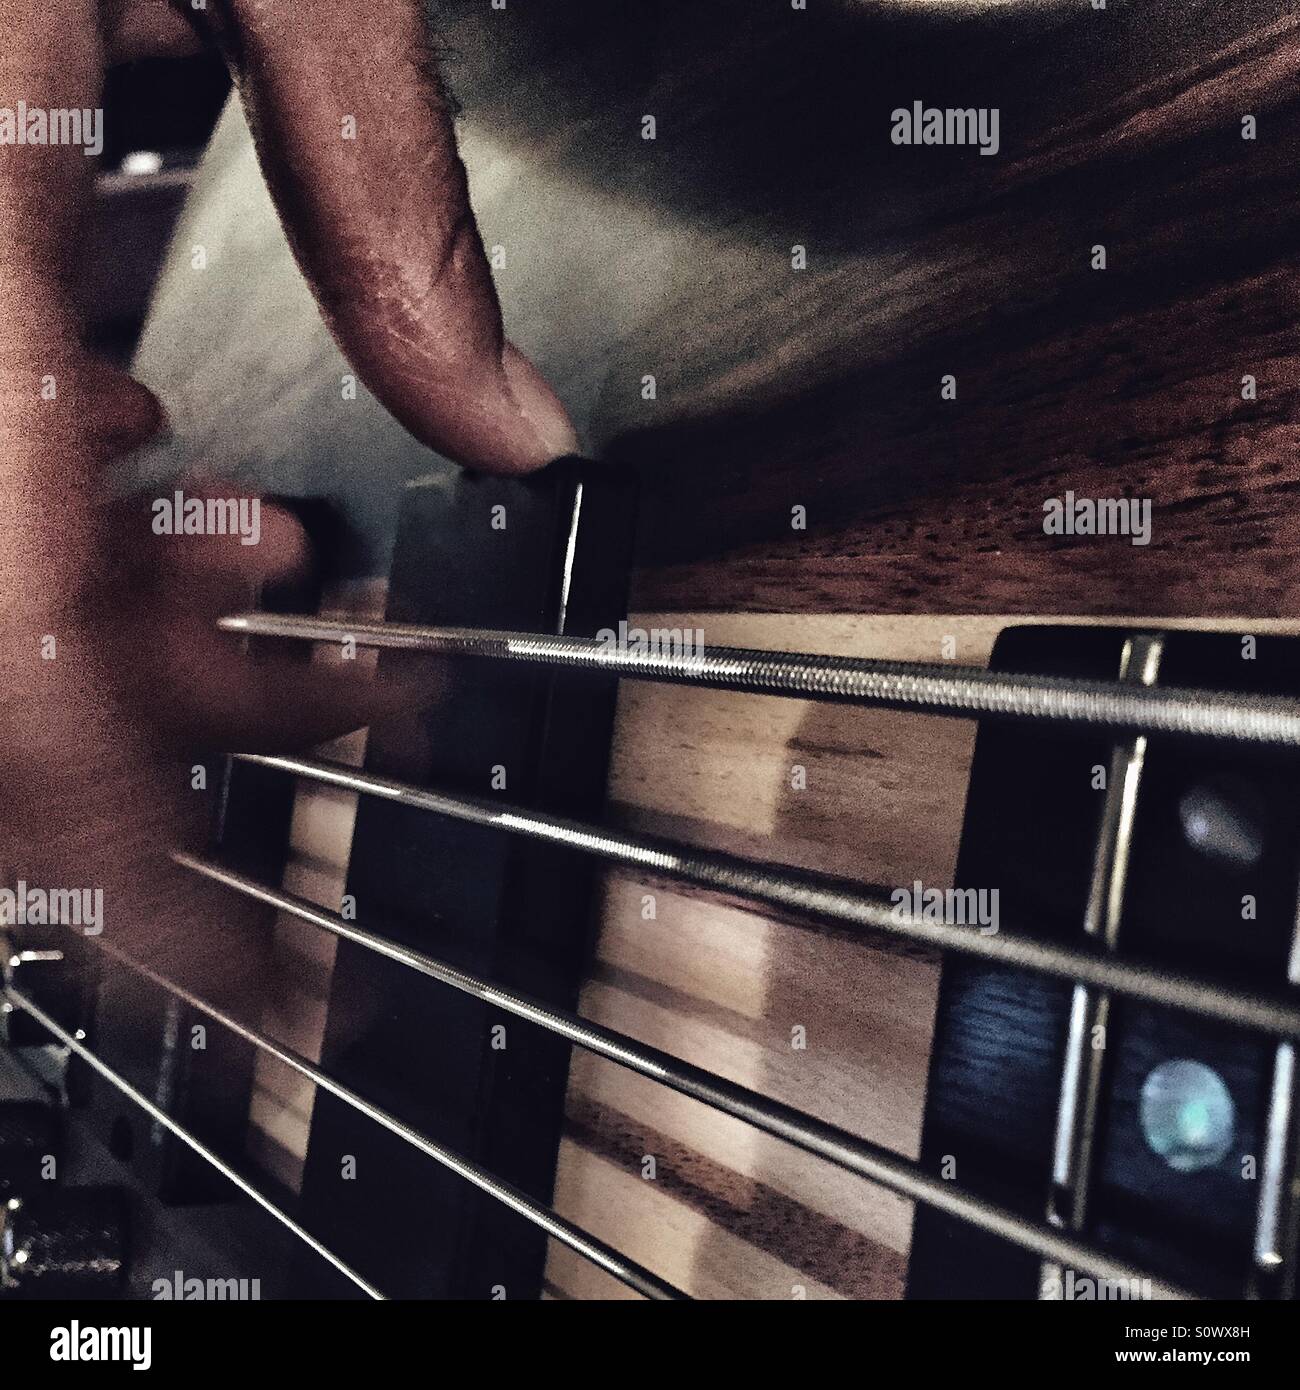 Finger picking on bass guitar Stock Photo